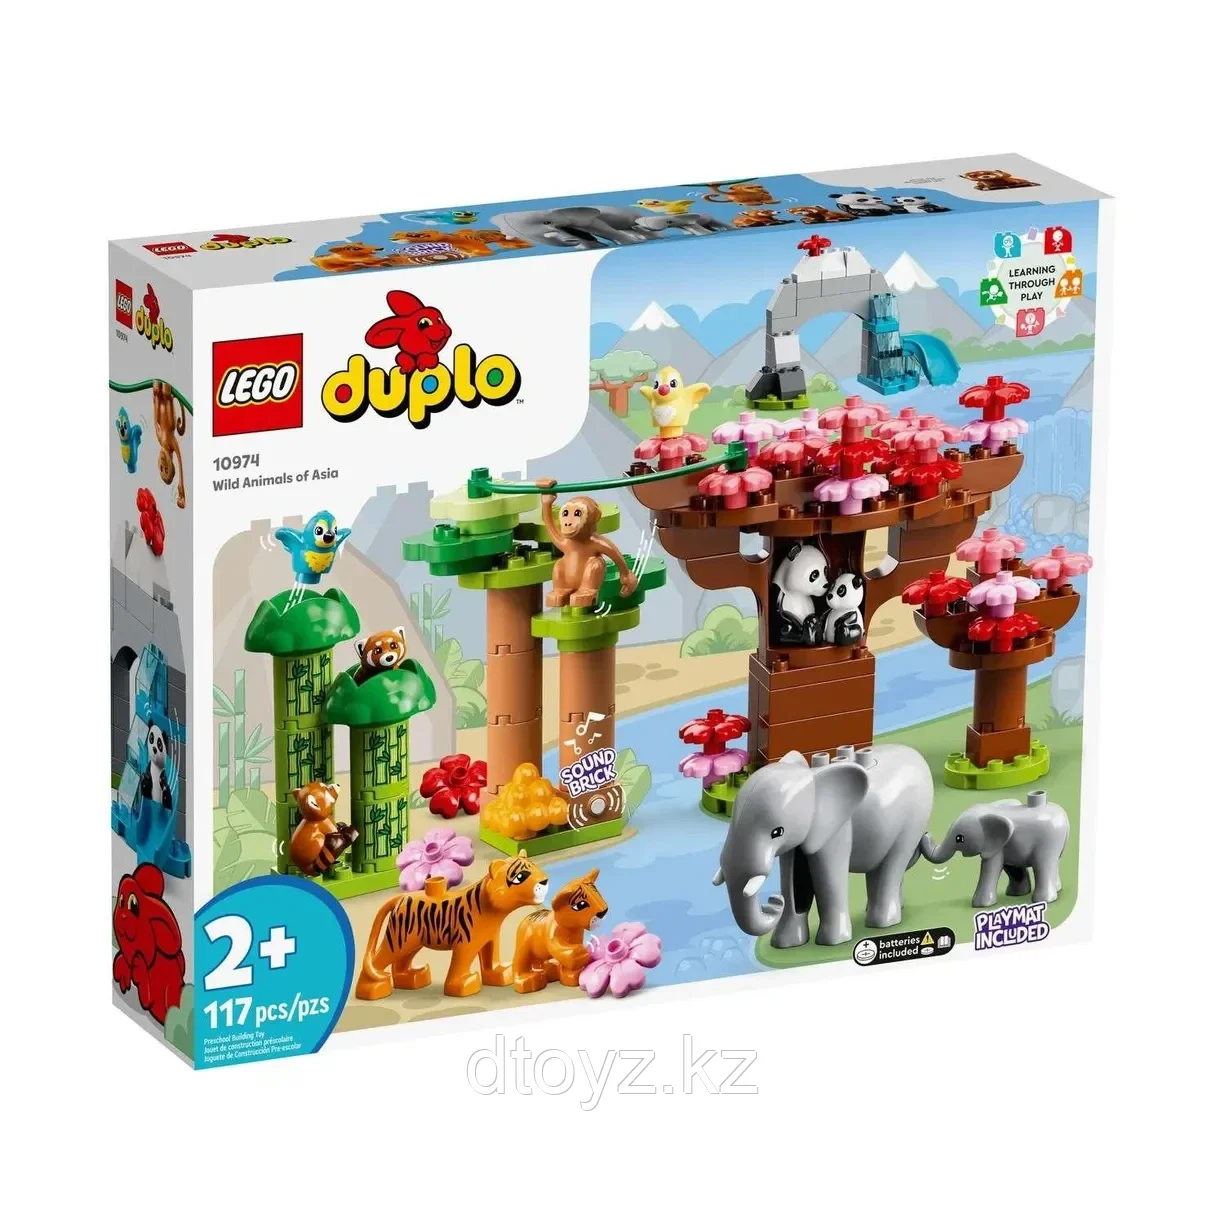 LEGO Duplo Wild Animals of Asia 10974